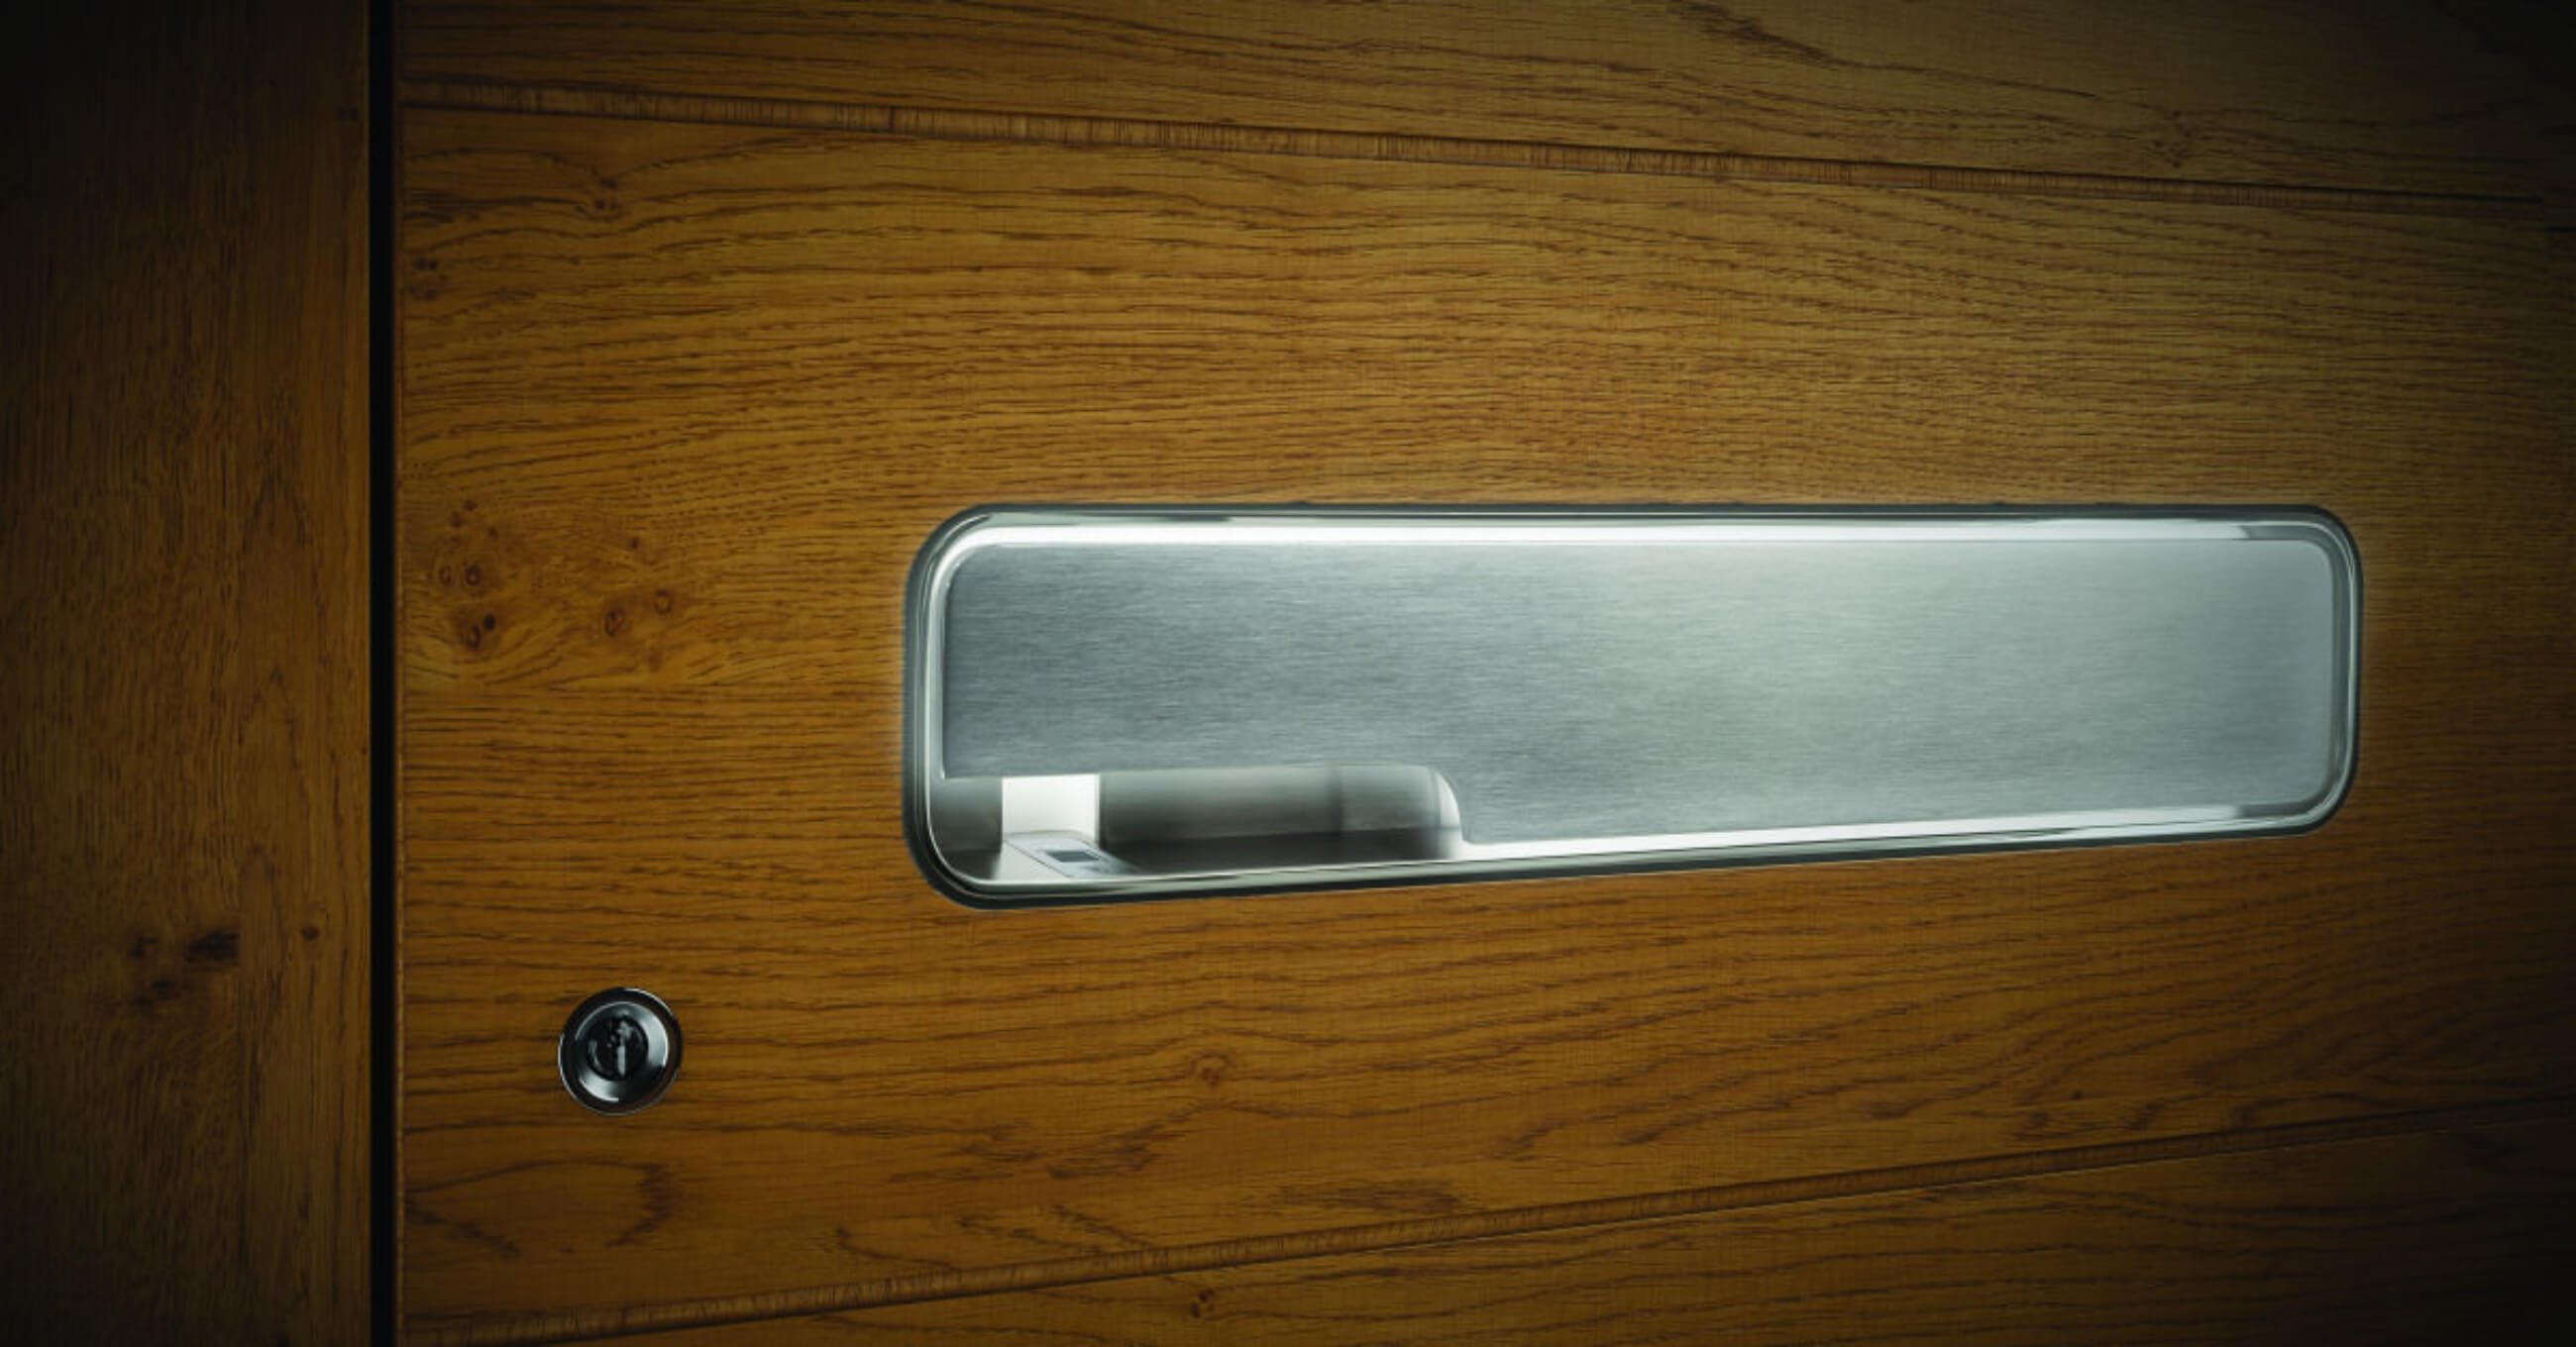 Fingerprint Haustür mit Fingerabdruck zu Tür öffnen | Pirnar